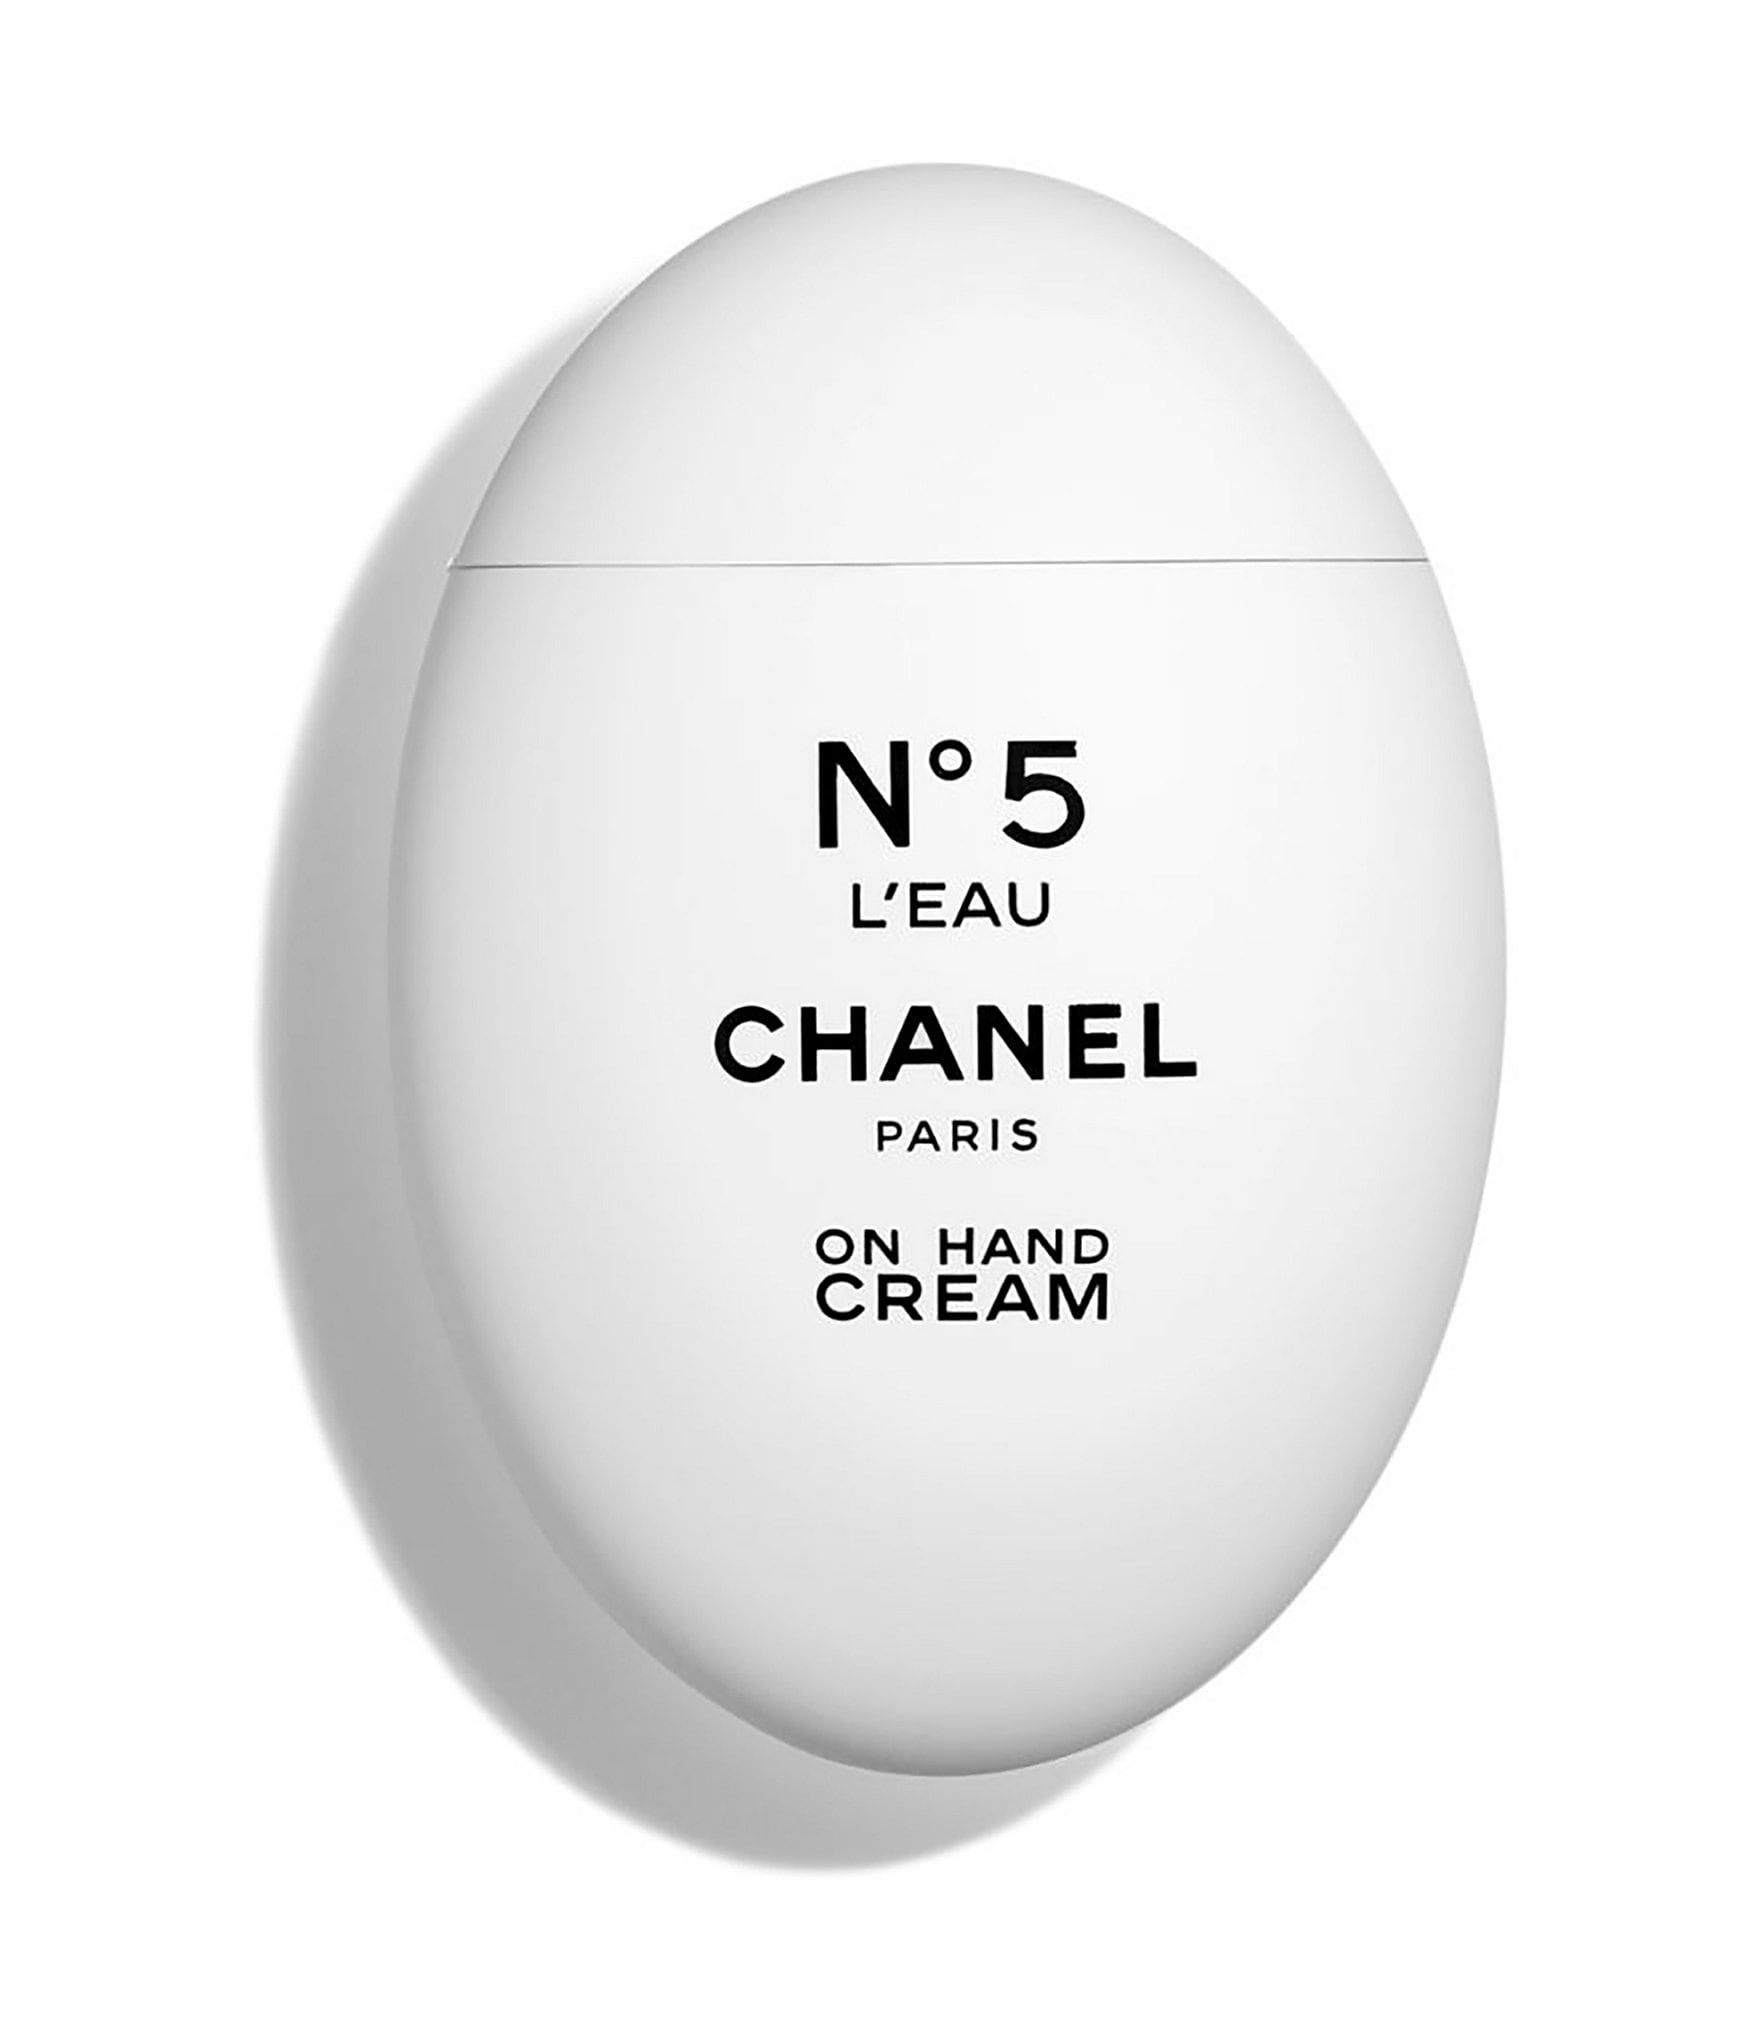 chanel egg